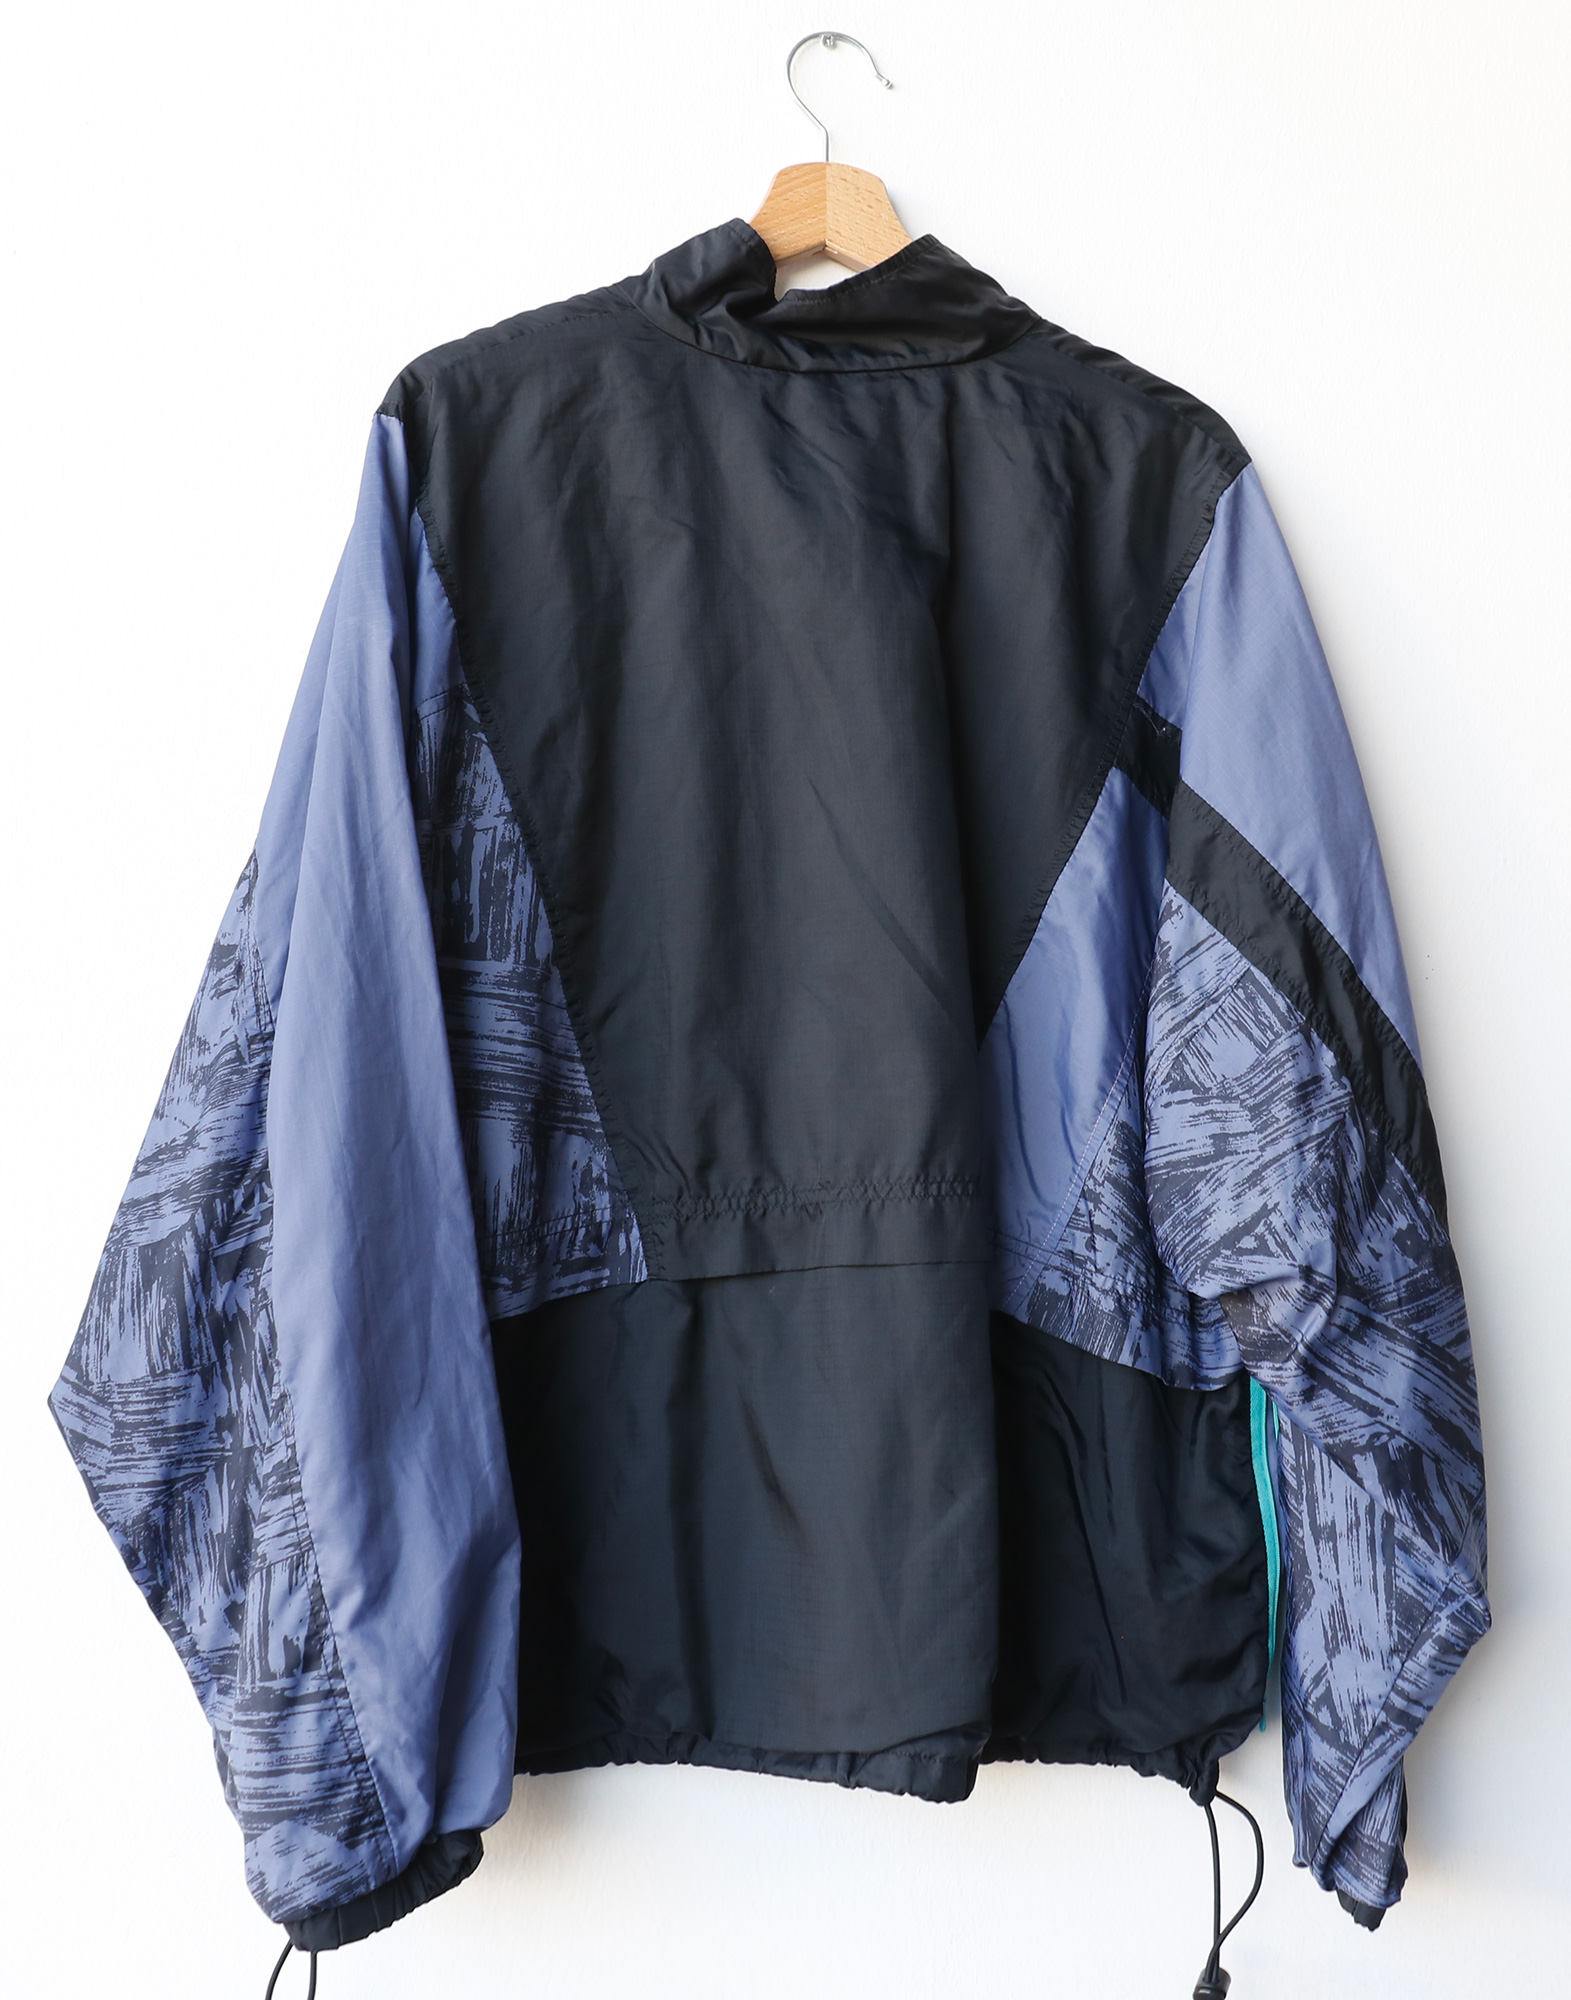 Nike - 90s shell suit jacket